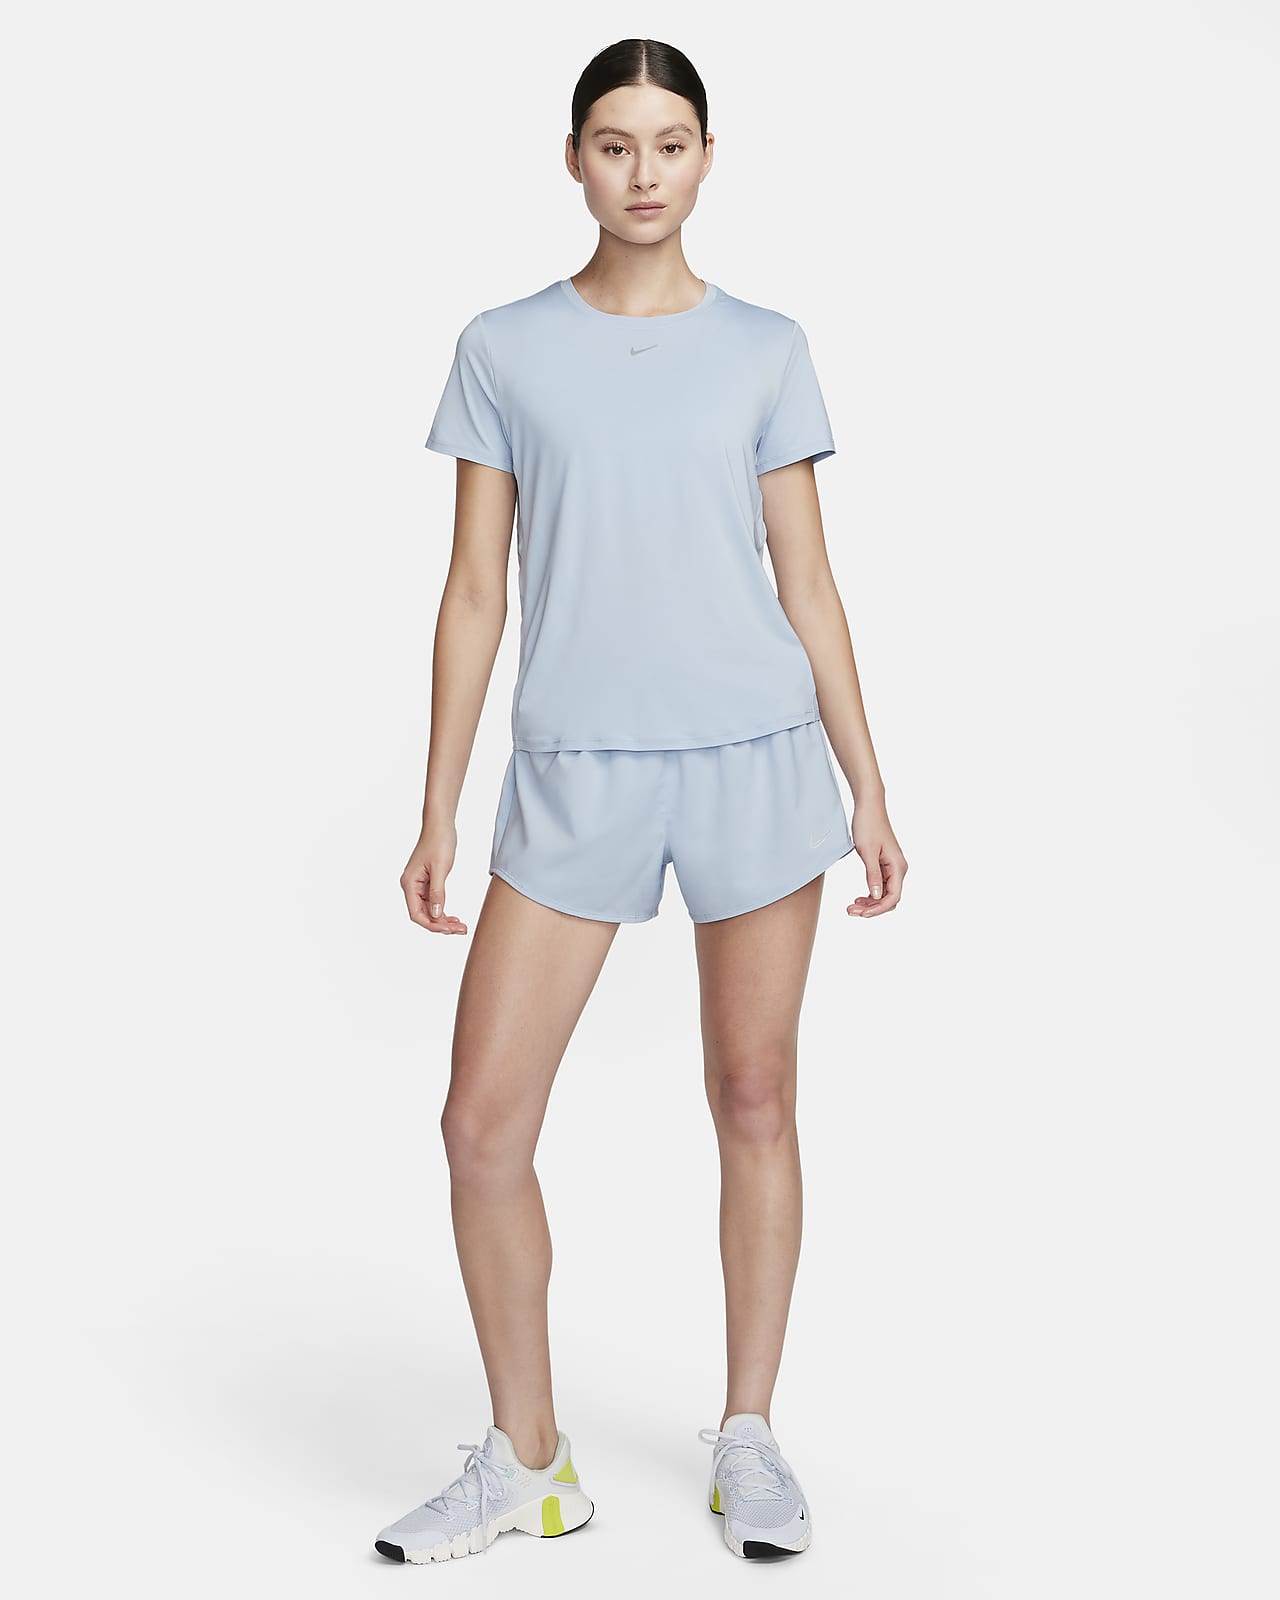 Women\'s Short-Sleeve Dri-FIT Top. Nike Classic One